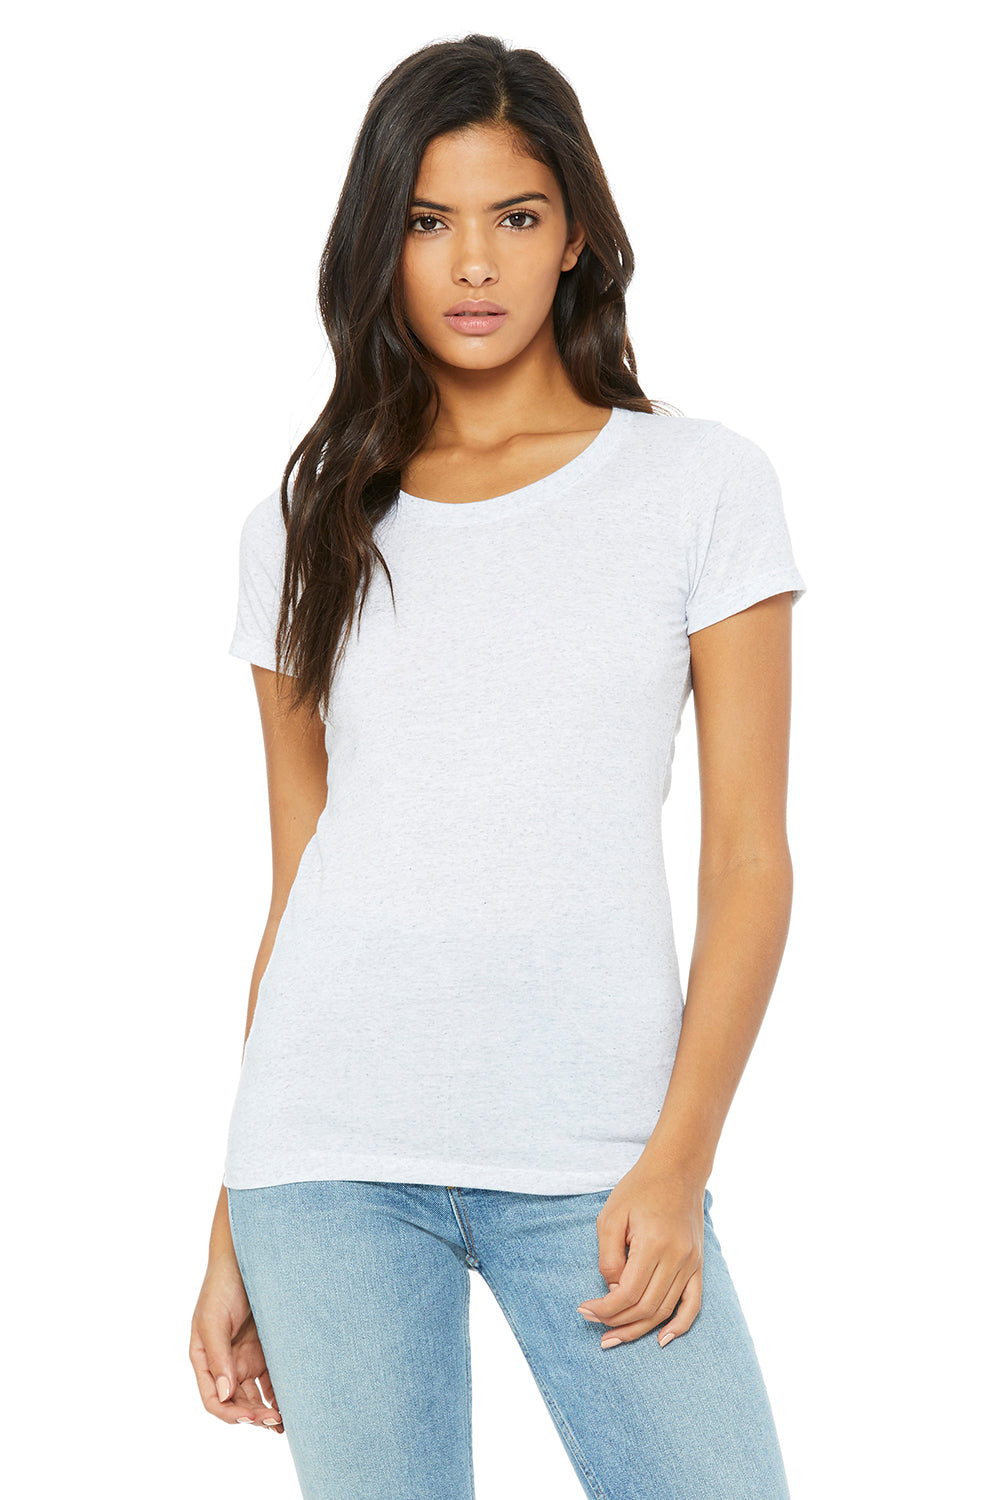 Bella + Canvas Womens Short Sleeve Crewneck T-Shirt B8413 ...